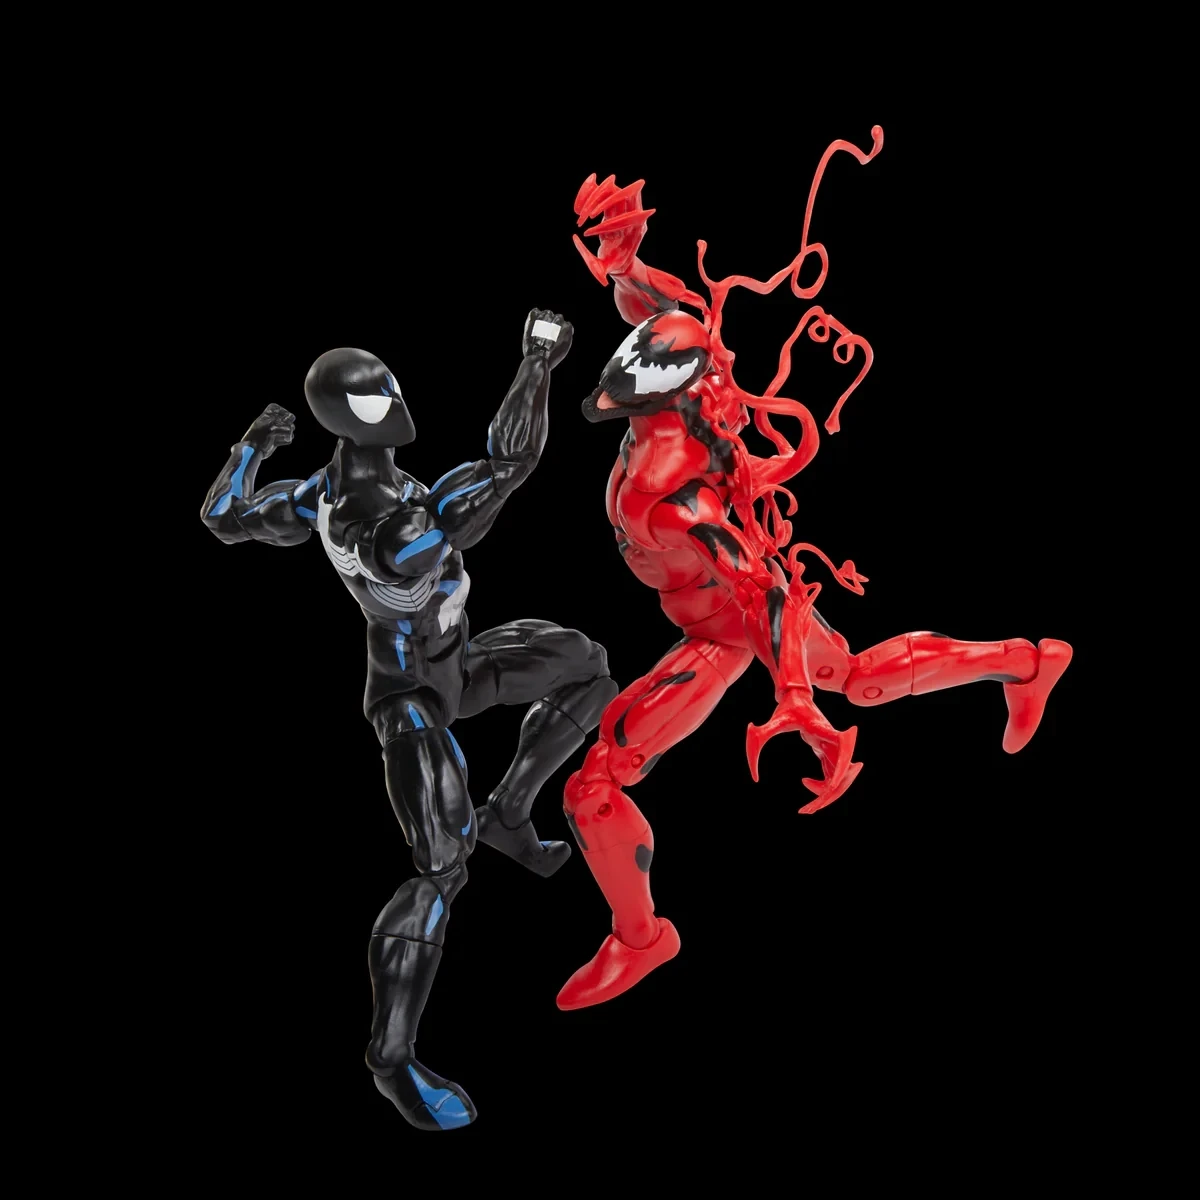 Marvel Legends Spiderman Vs Carnage 2-pack 6 Action Figure - Action  Figures - AliExpress